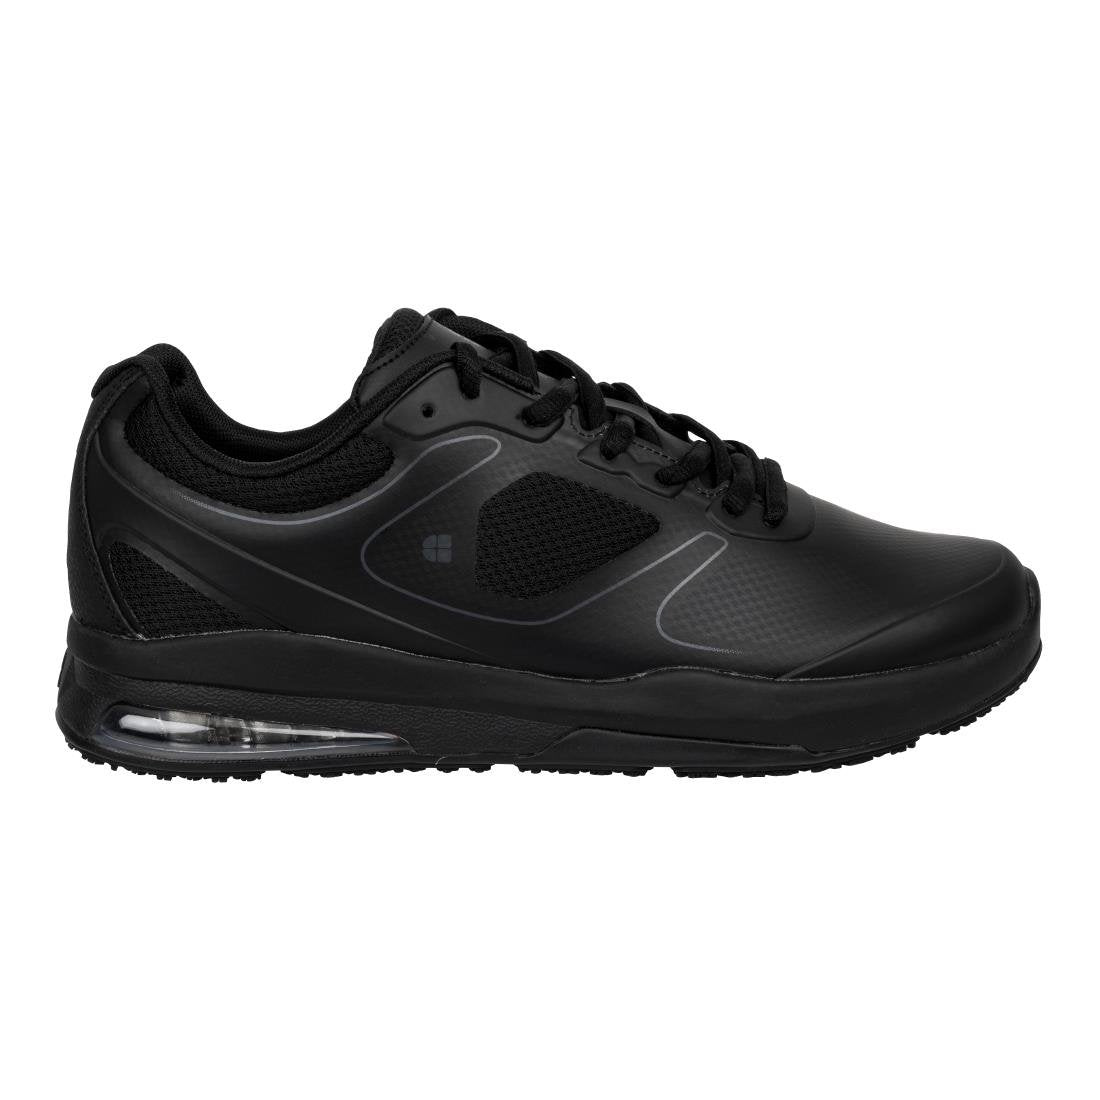 BB586-47 Shoes for Crews Men's Evolution Trainers Black Size 47